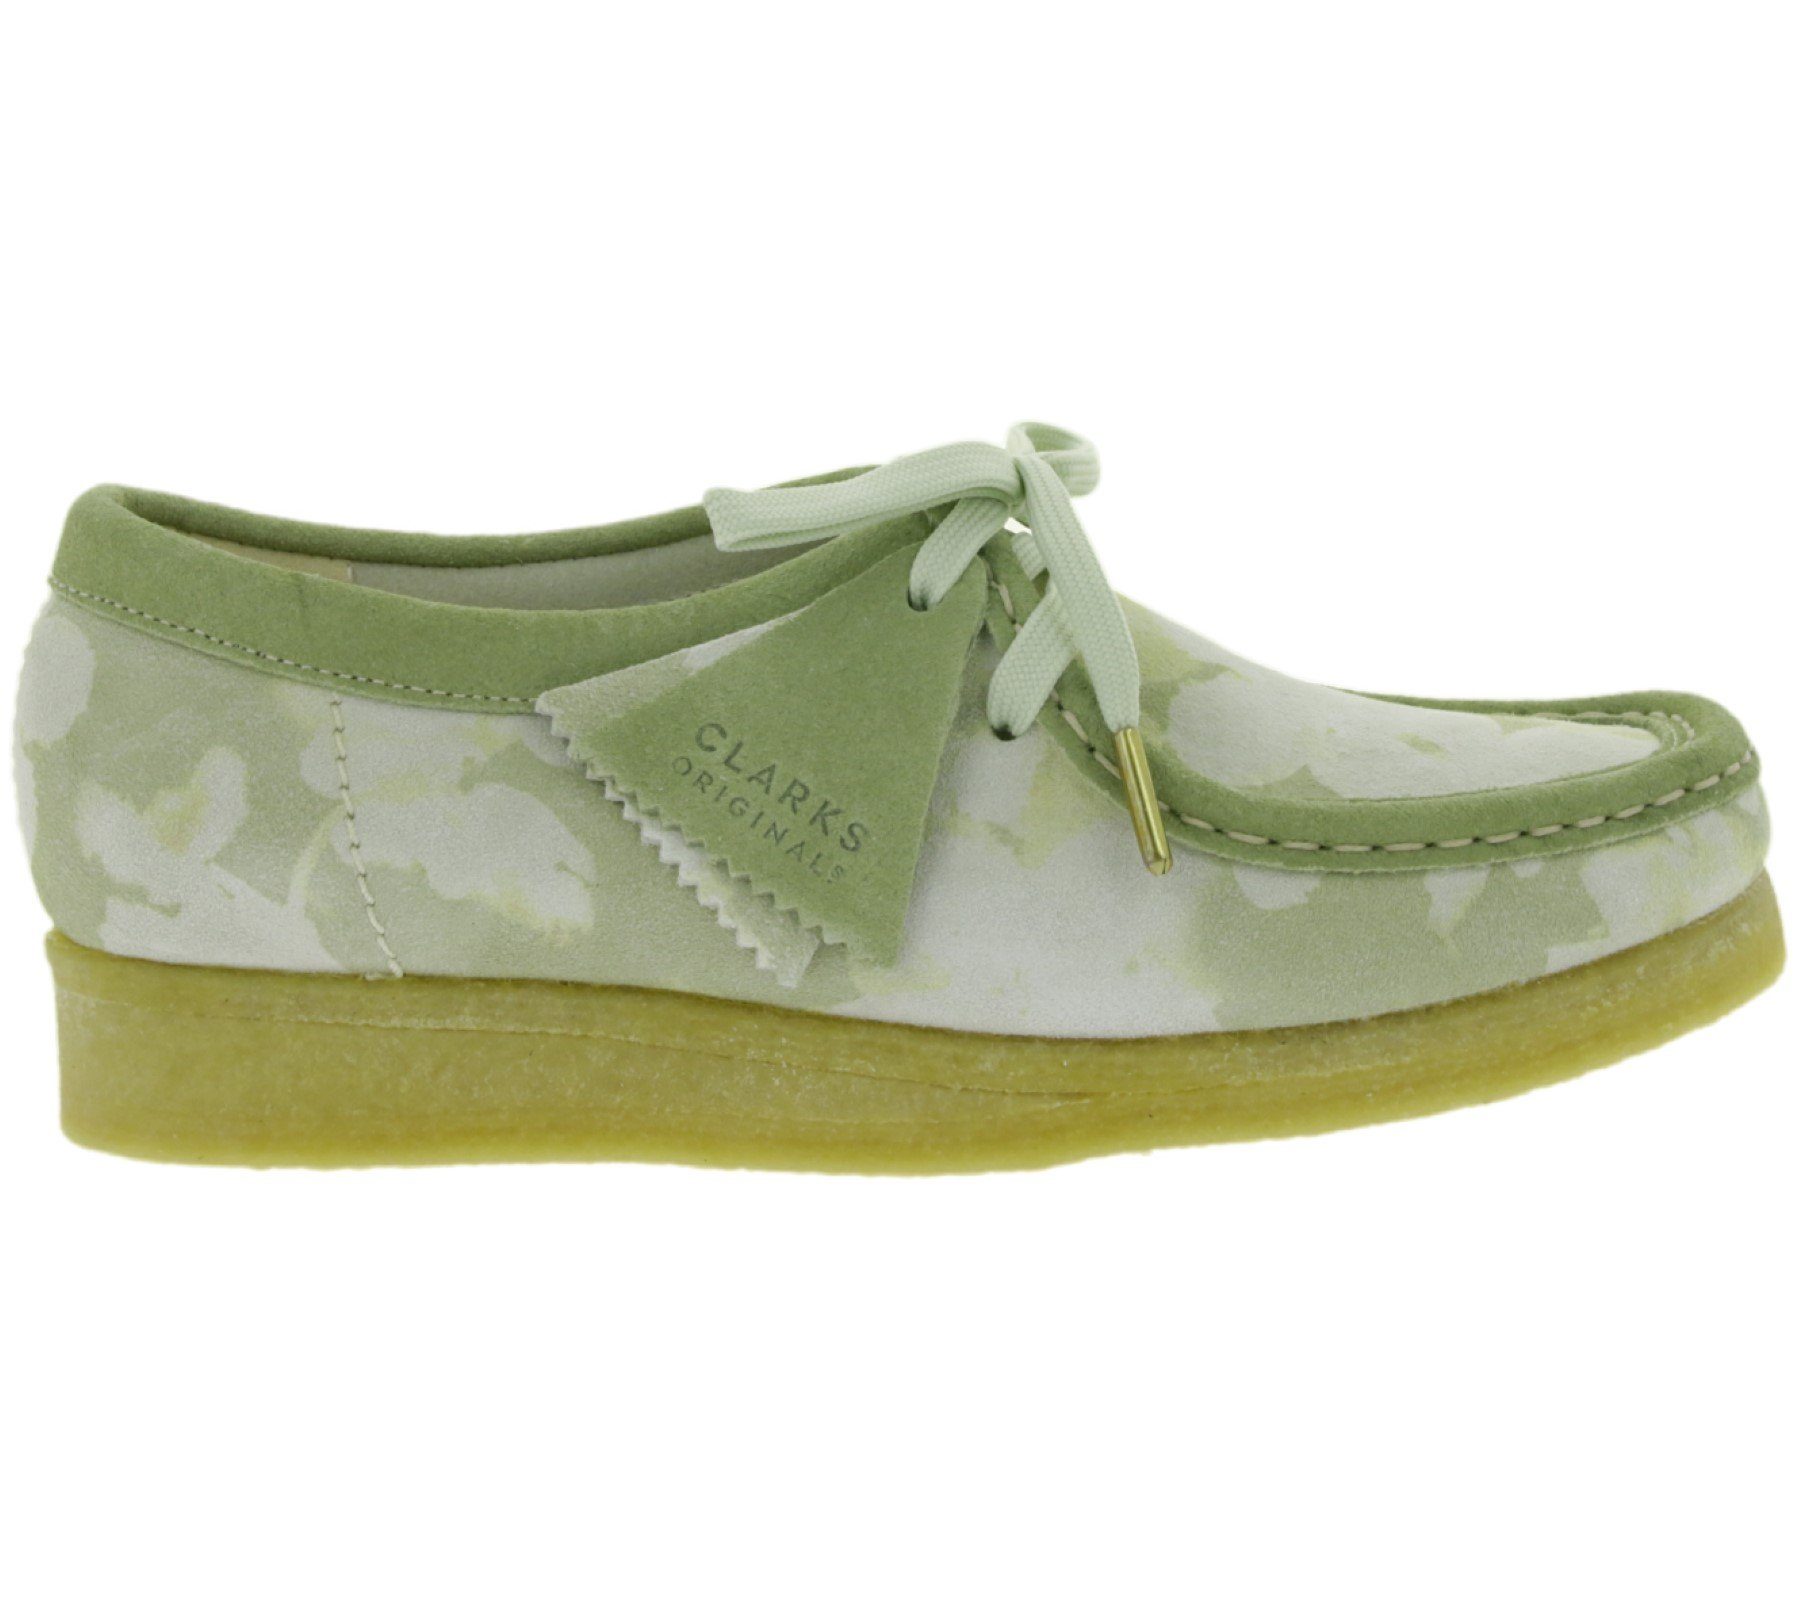 Clarks floralem Wallabee Halbschuhe Muster Damen Originals Clarks Schnürschuh Grün mit Echtleder-Bootsschuhe Schnürschuhe